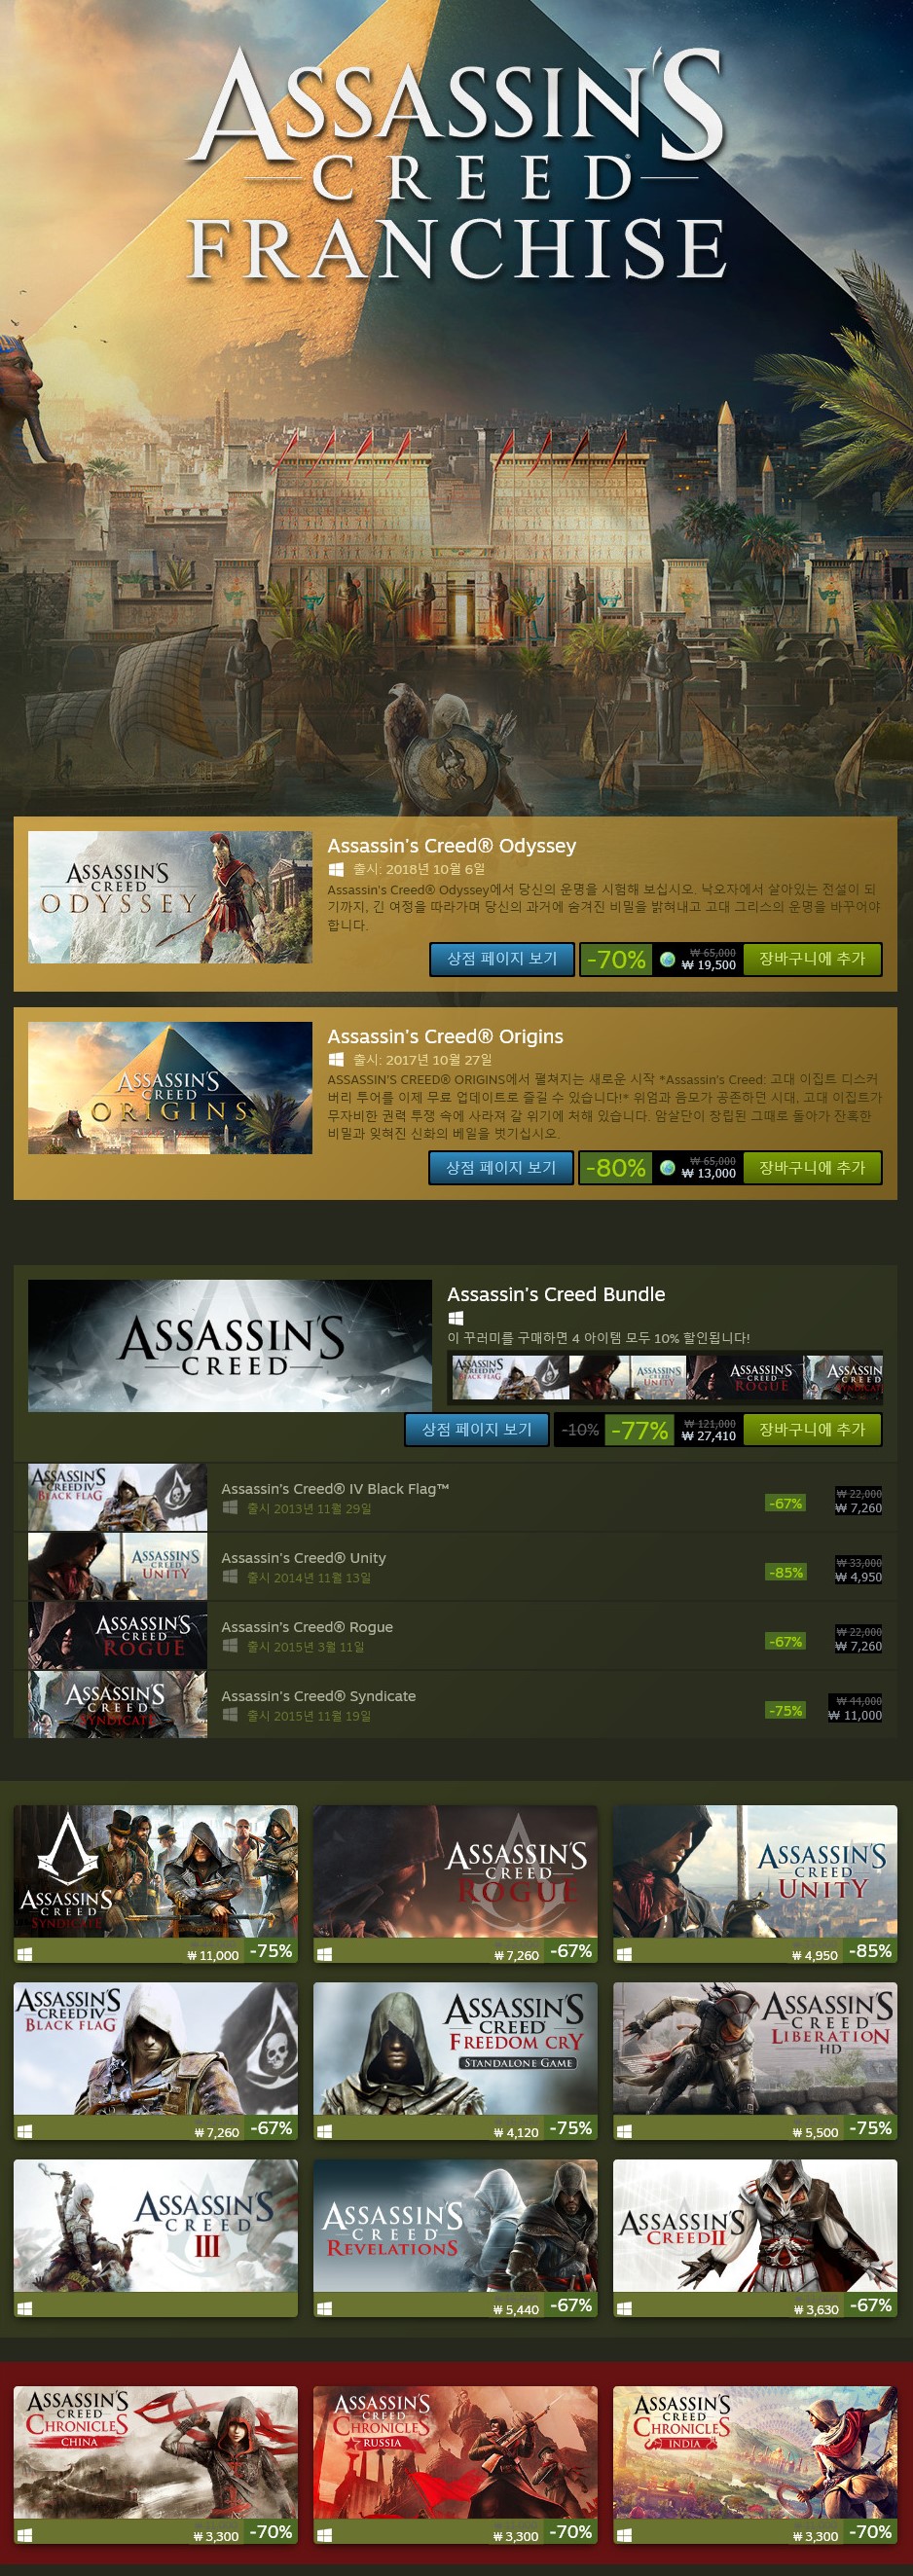 Screenshot_2020-10-14 Assassin's Creed Franchise.jpg